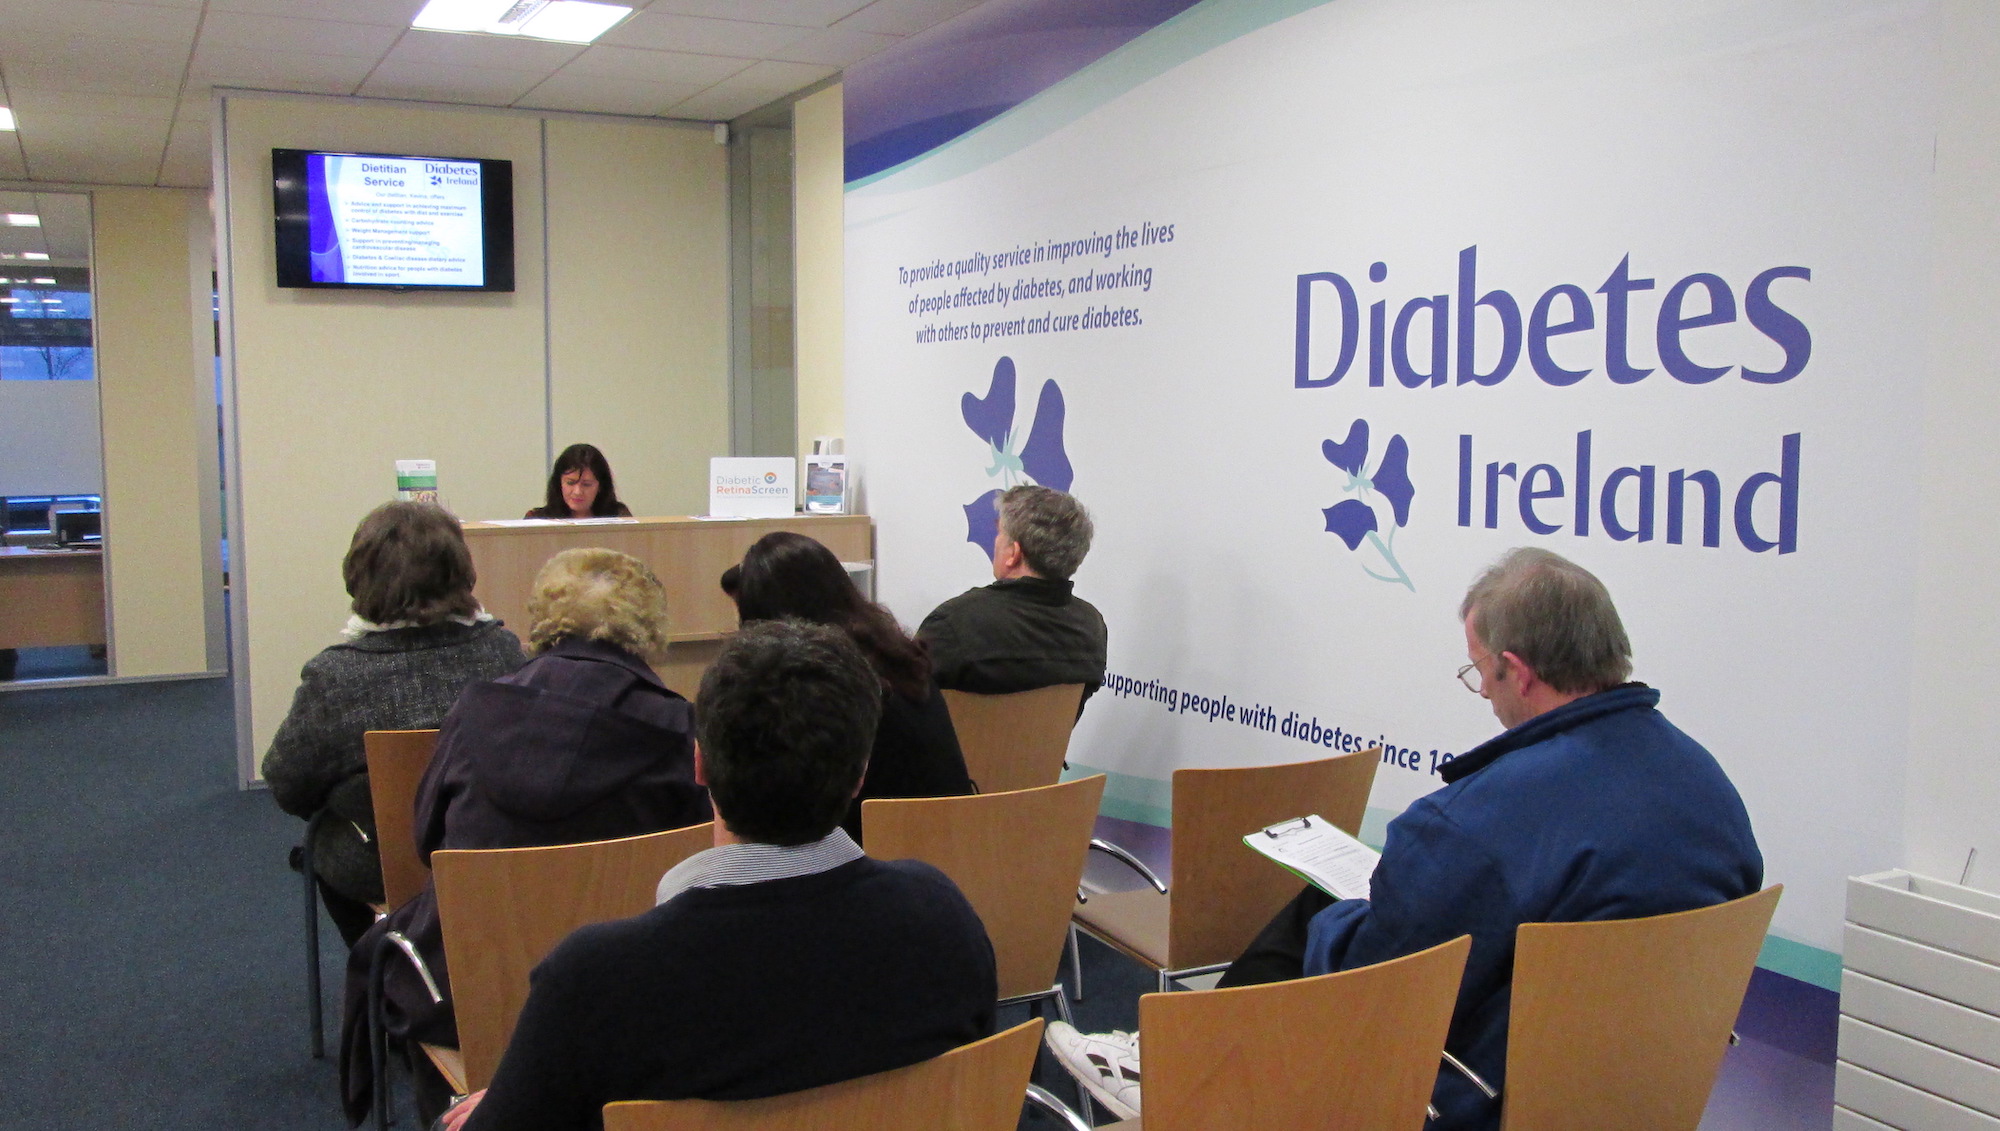 Diabetes Ireland